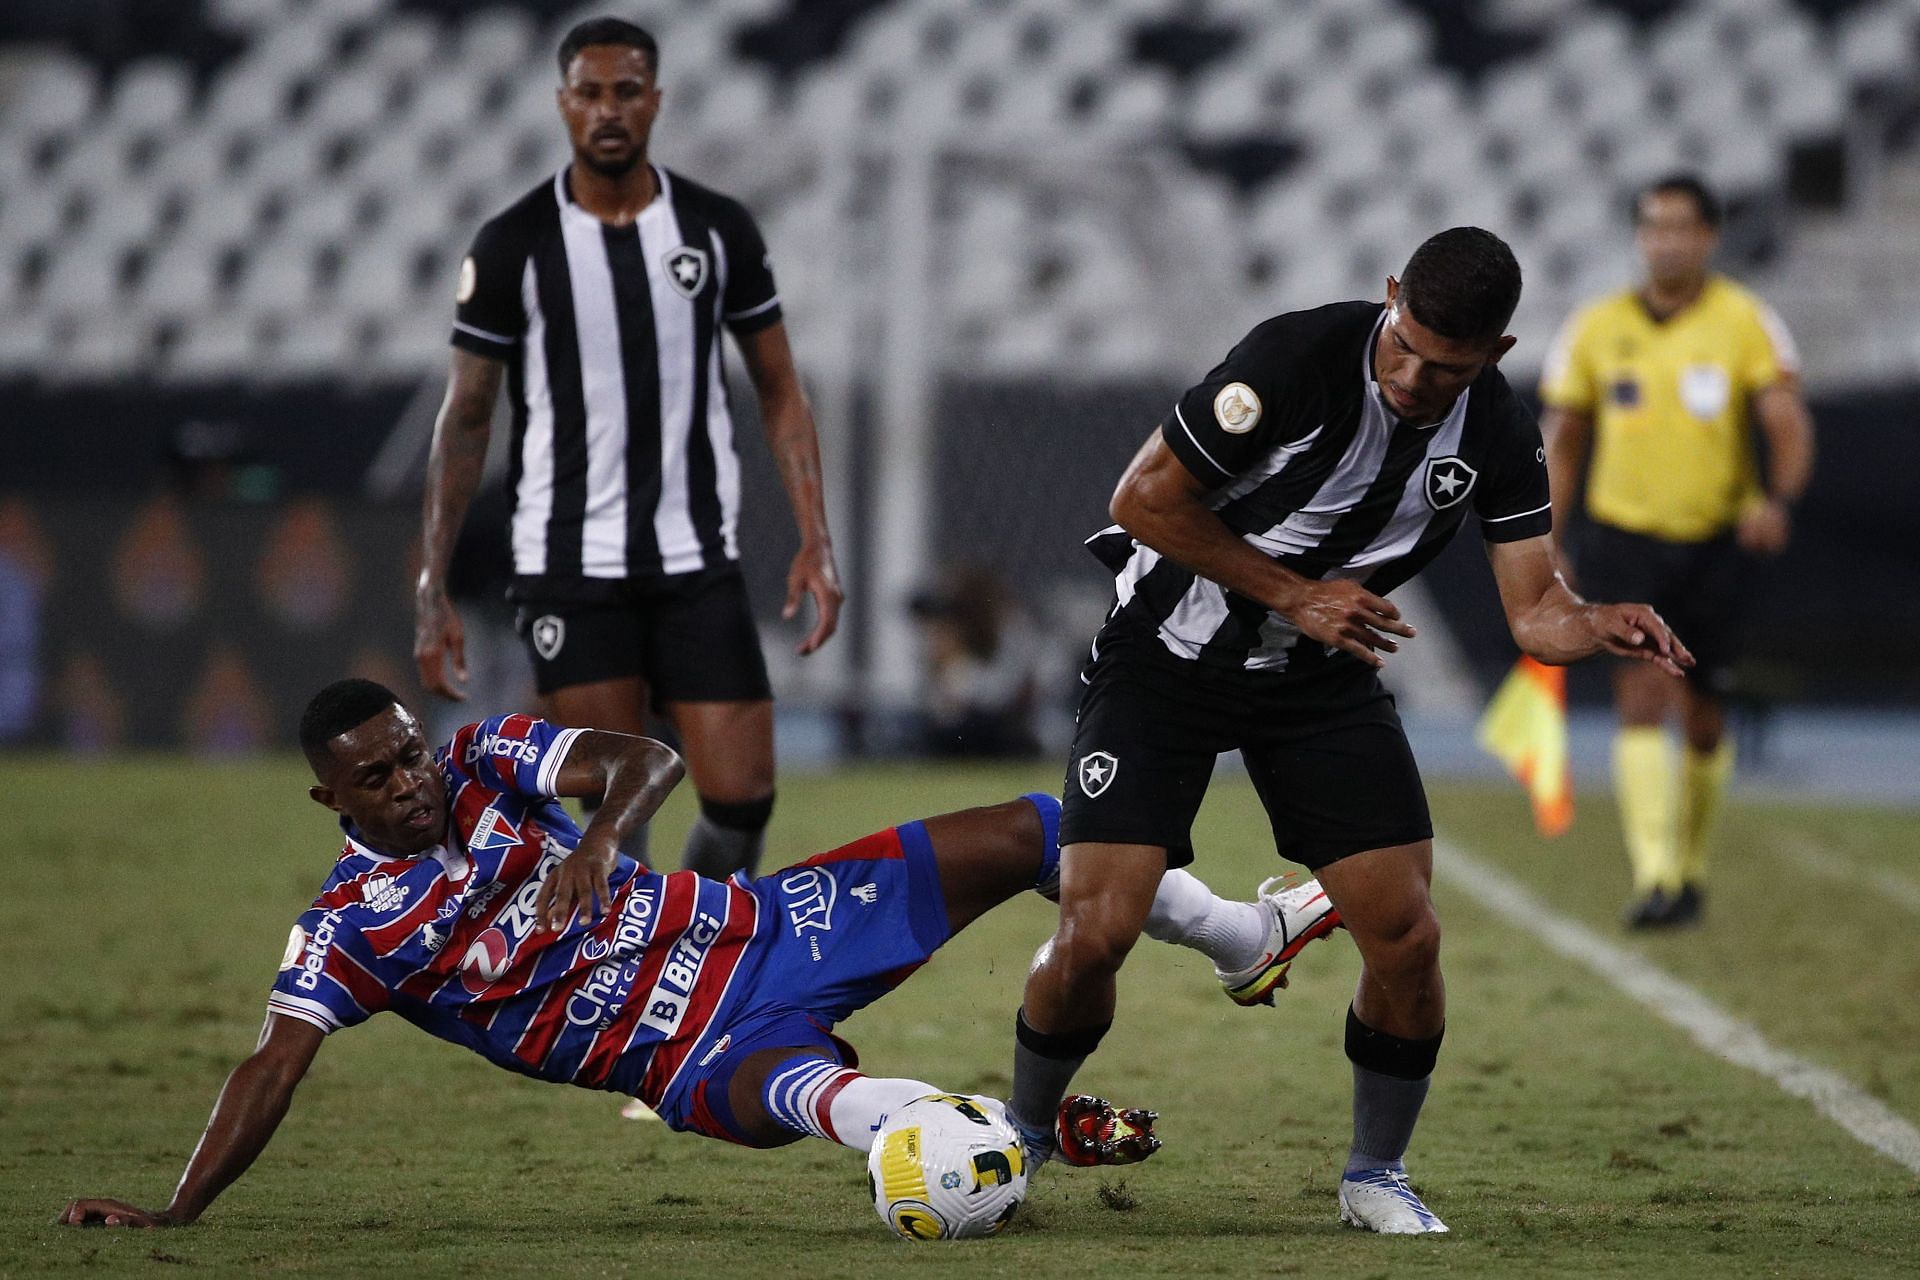 Fortaleza vs Botafogo Prediction and Betting Tips